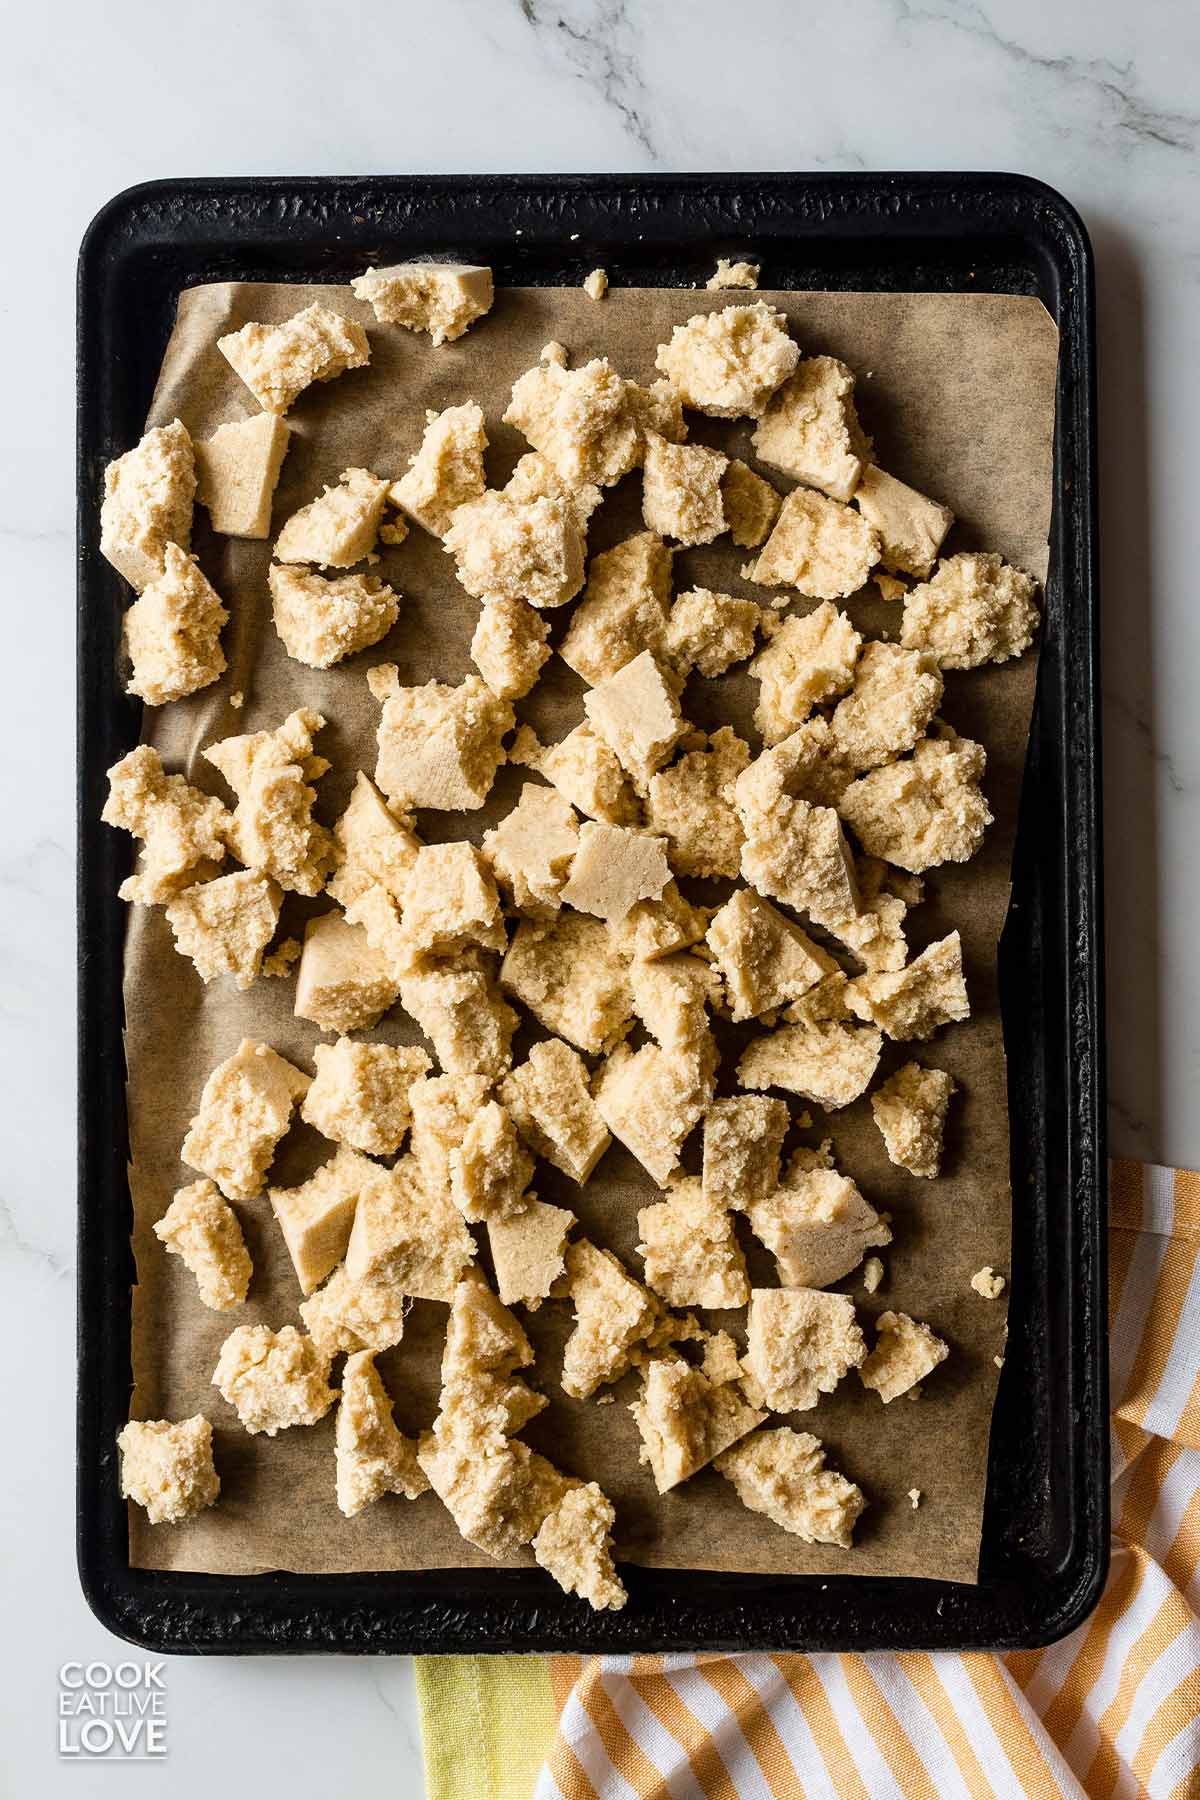 Large chunks of tofu frozen on a baking tray.